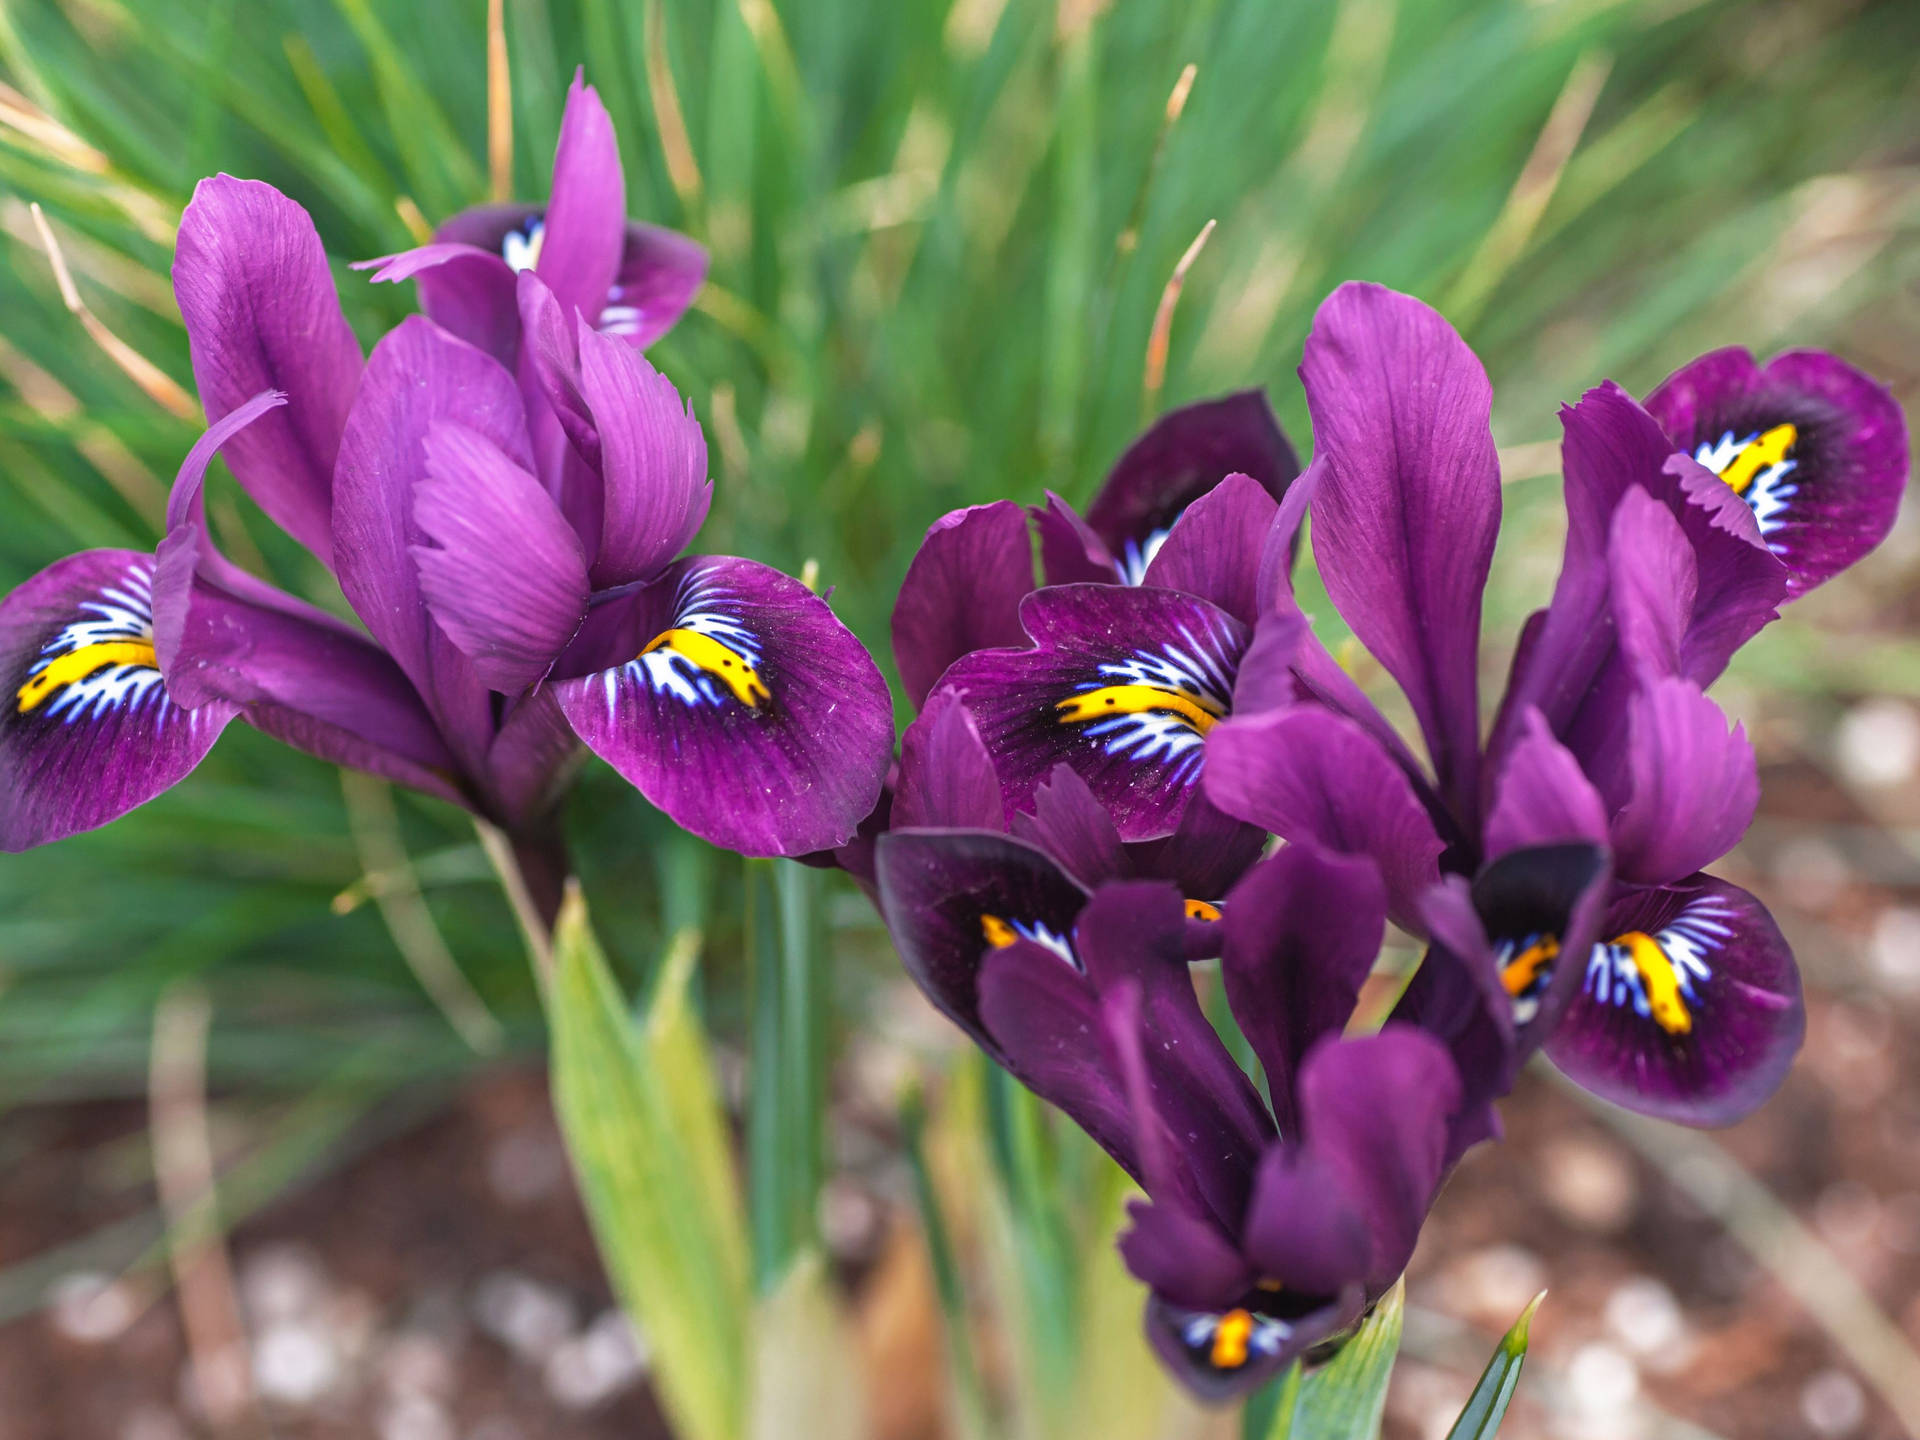 Caption: A Close-up Image Of The Elegant Iris Reticulata Flower